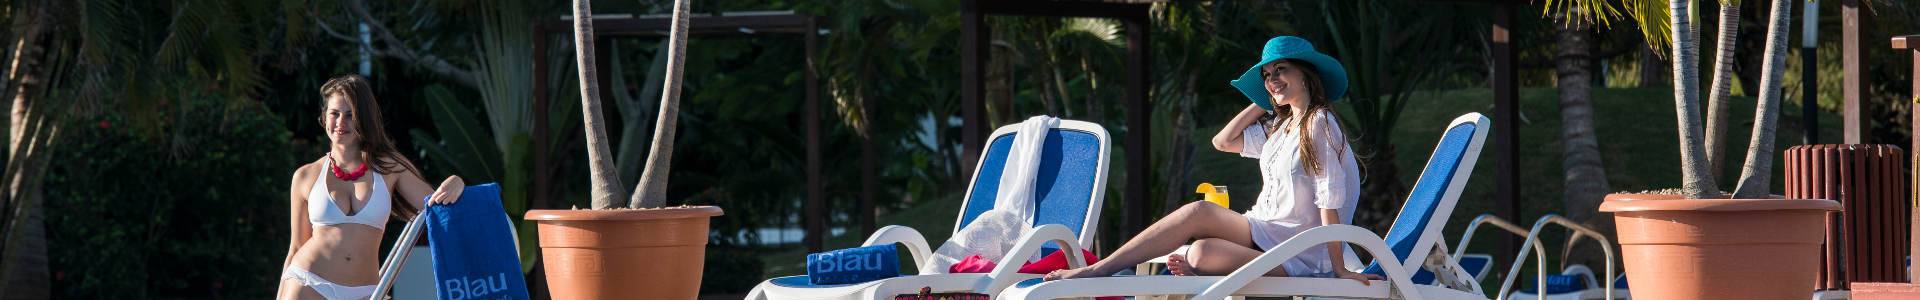 Blau hotels - Kuba - 